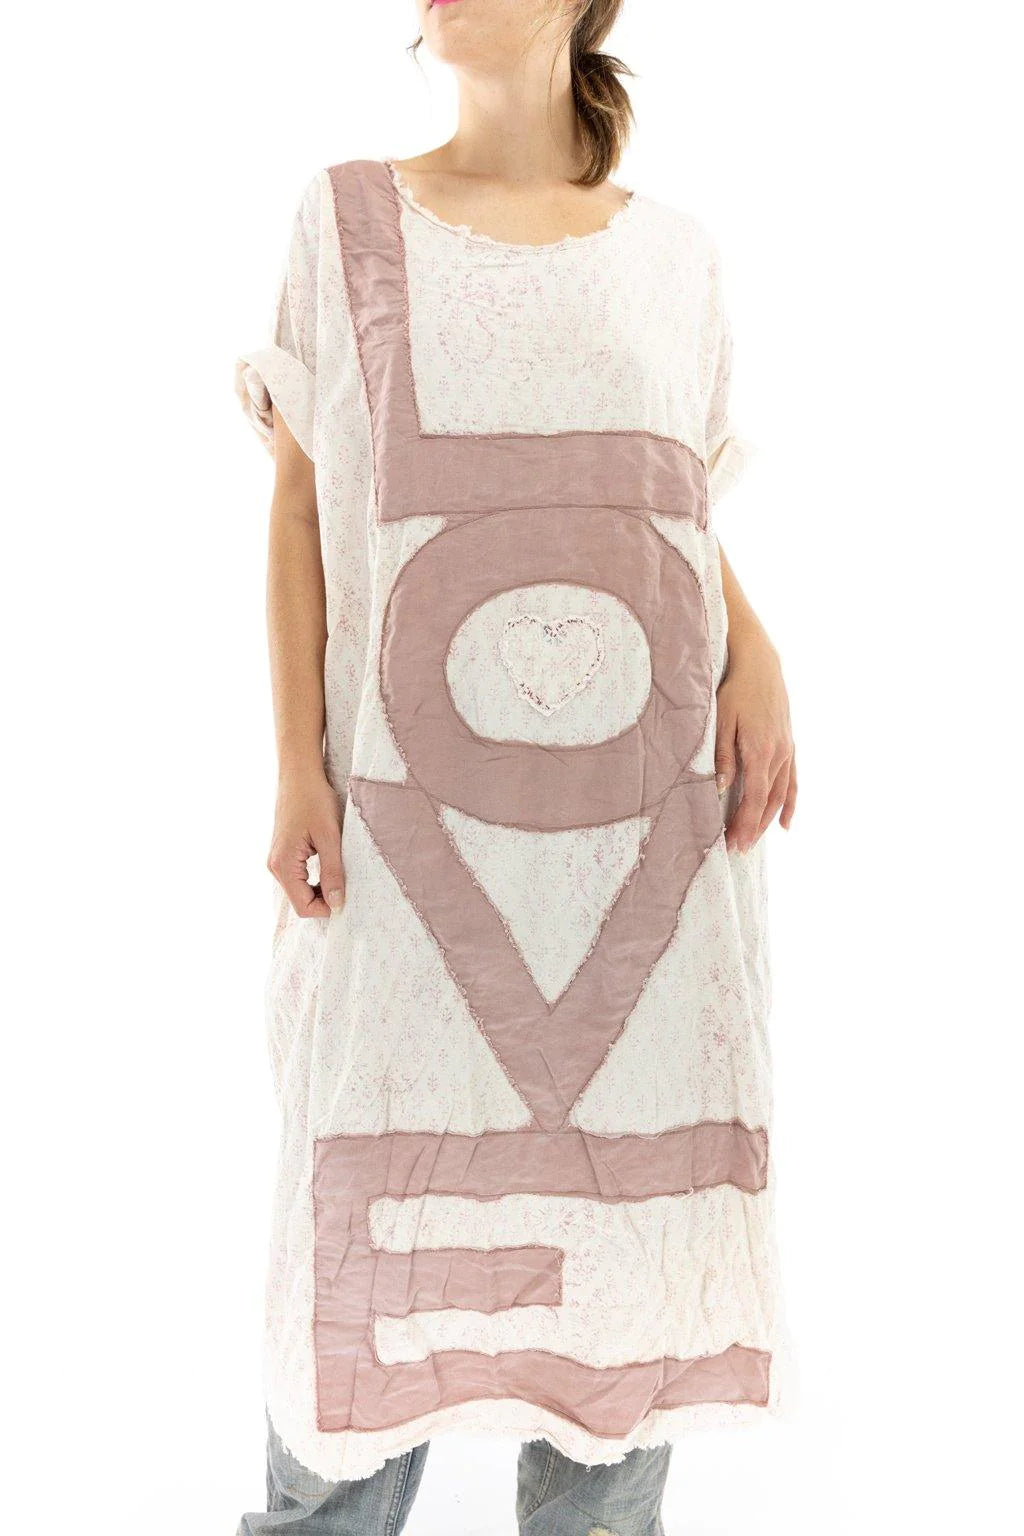 Evolve Artist Smock Dress by Magnolia Pearl